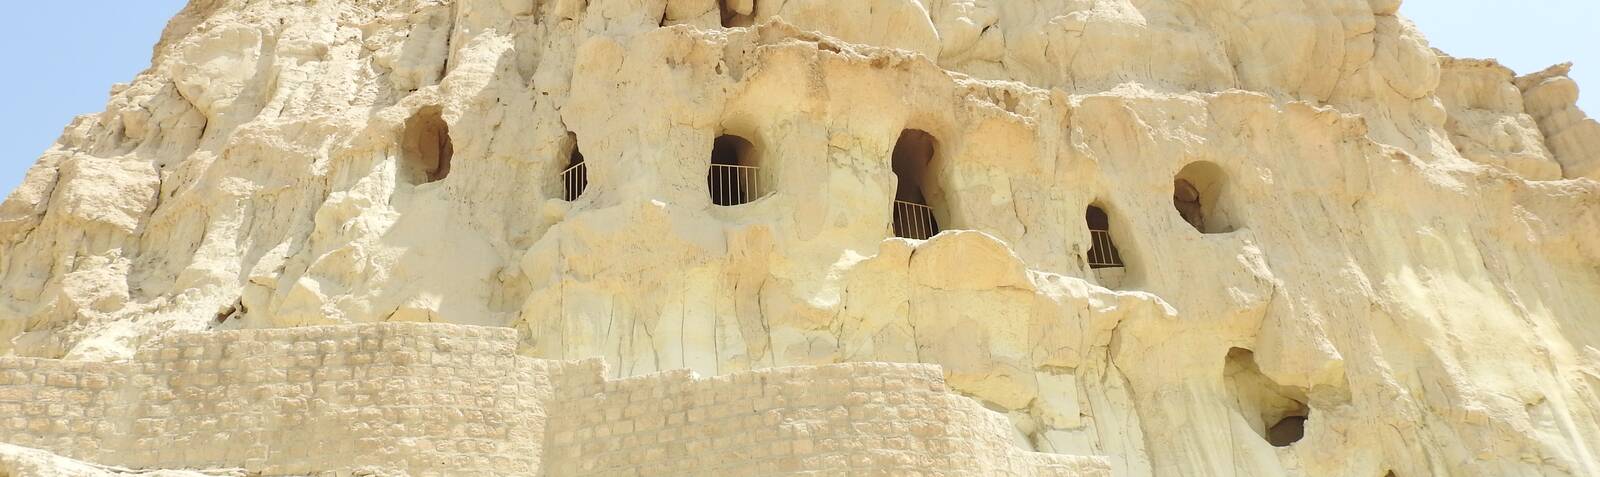 Пещера Харбас